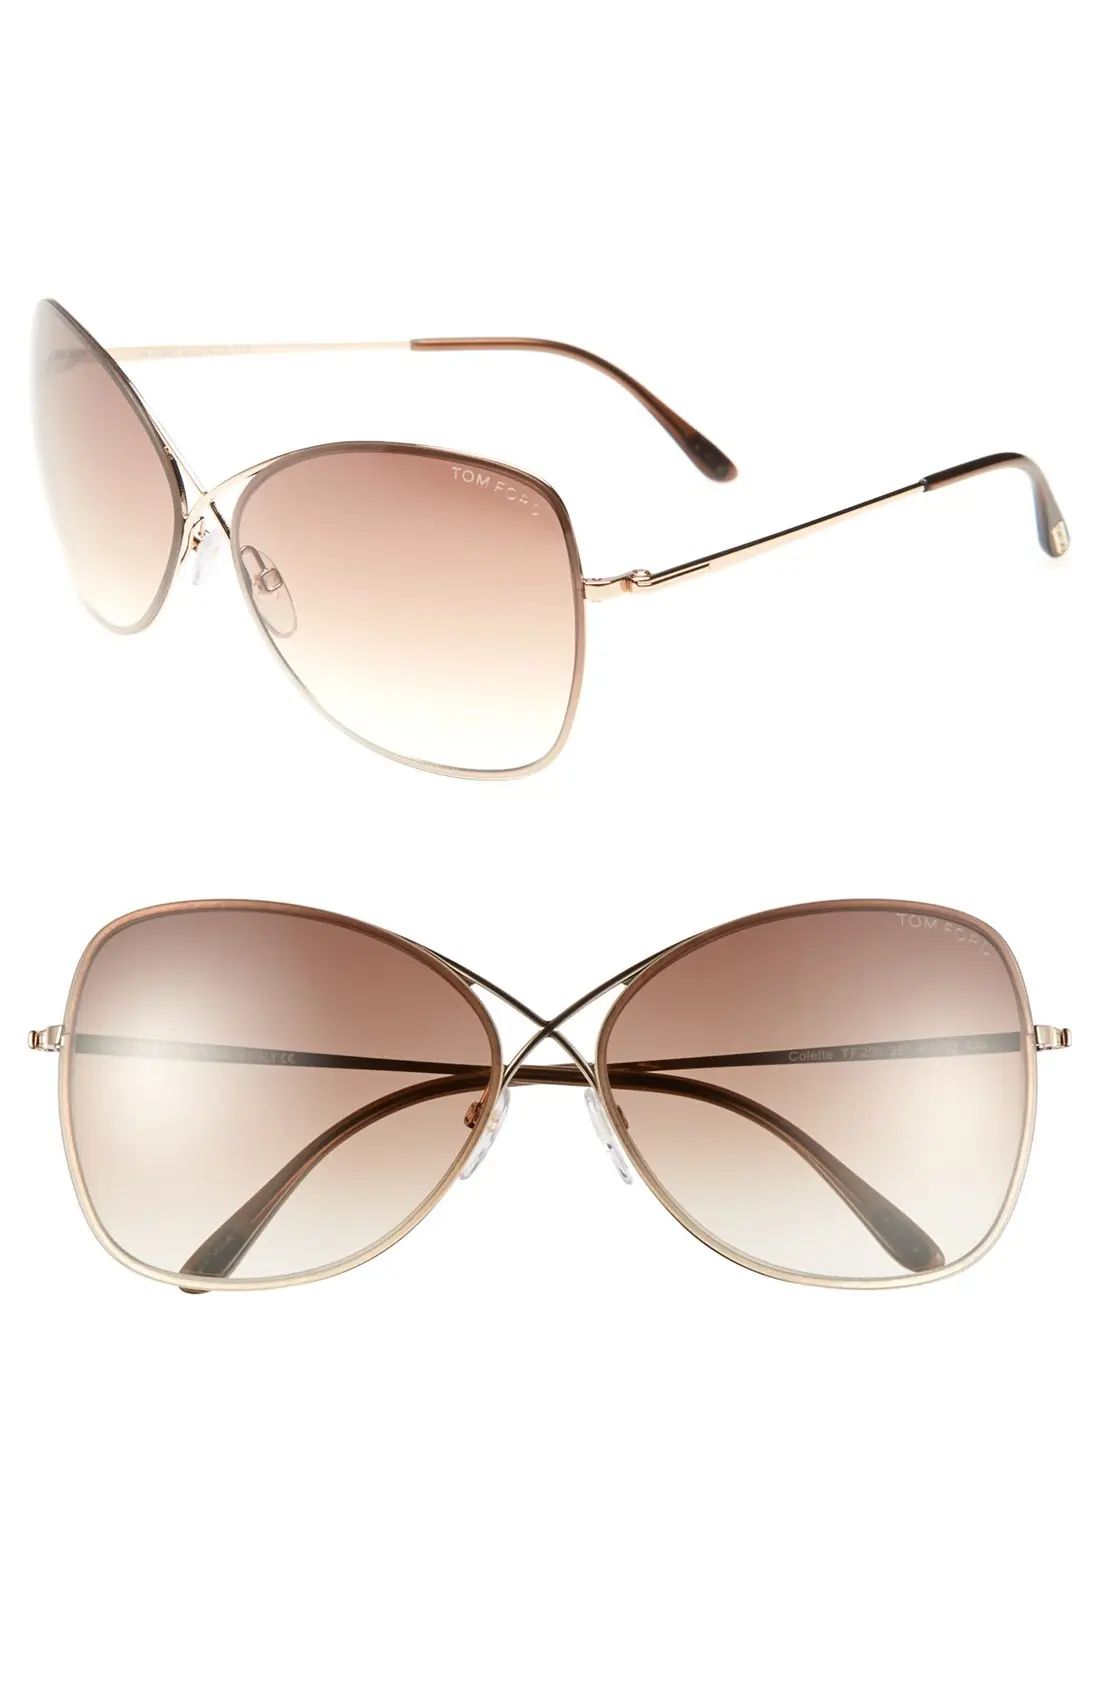 Tom Ford 'Colette' 63mm Oversize Sunglasses | Nordstrom